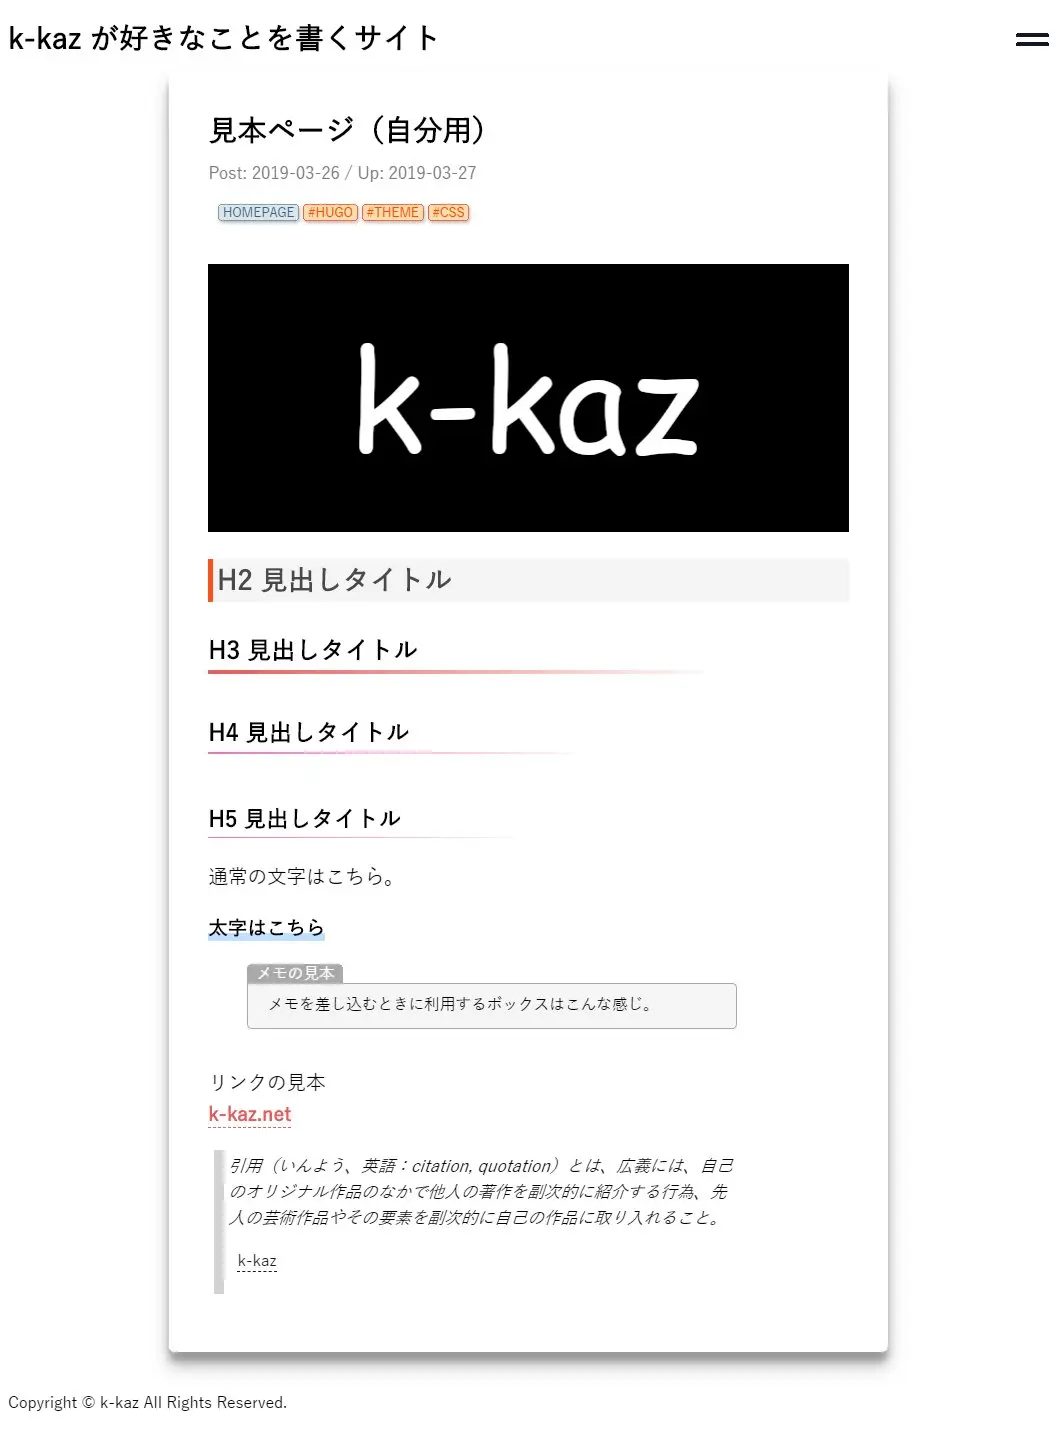 k-kaz 投稿記事 モバイル